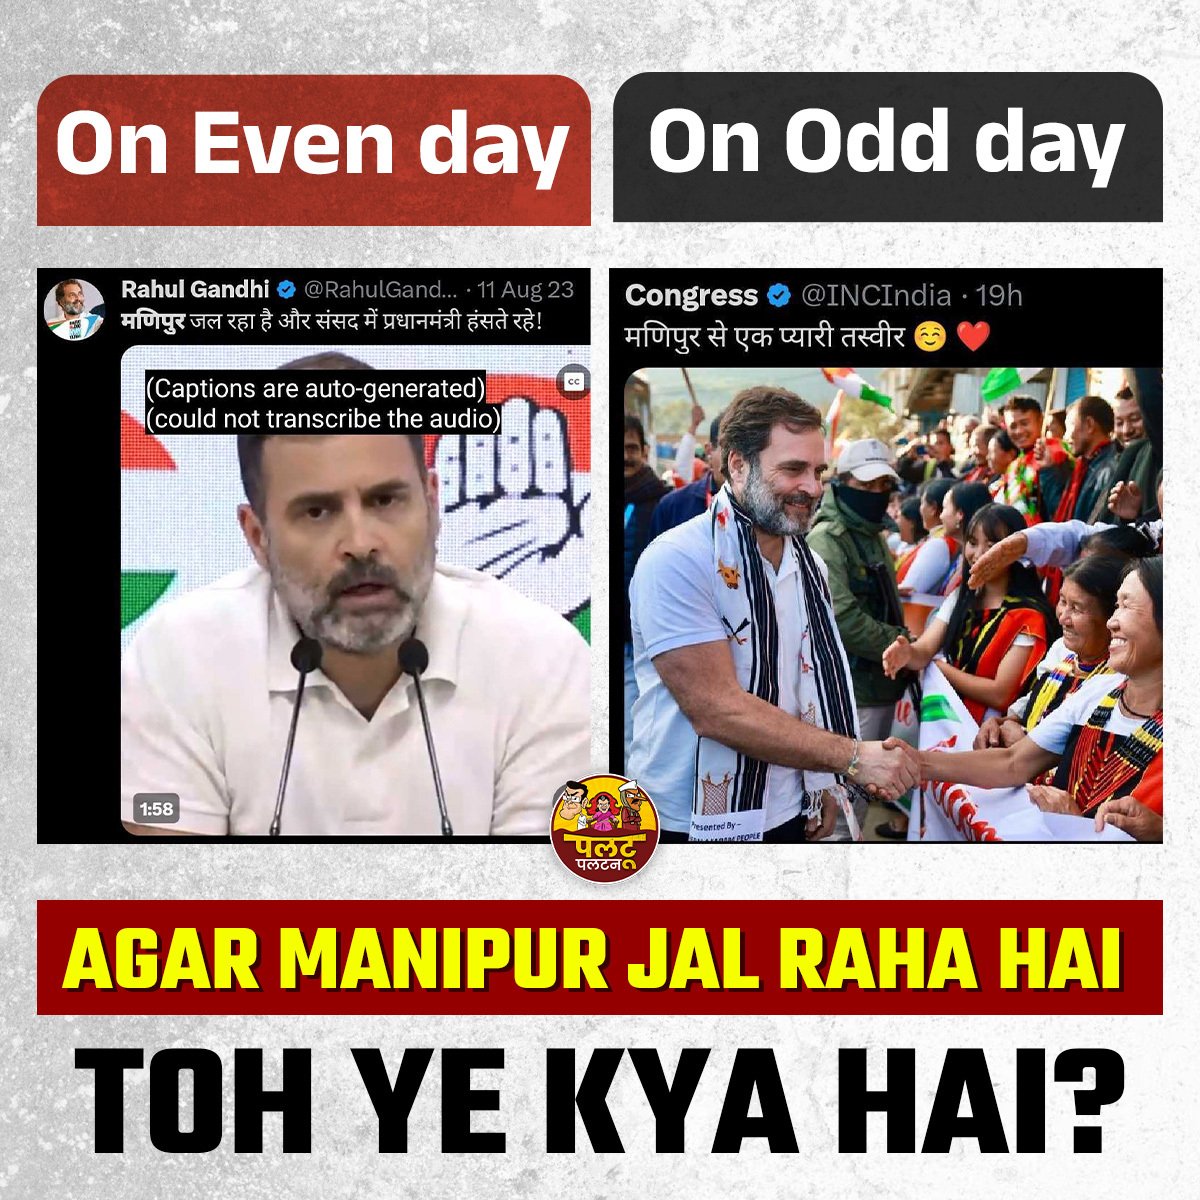 चमचों अब जवाब दो तो मानें...

#Manipur #ManipurViolence #manipurburning #rahulgandhi #BharatJodoYatra #BharatJodoNyayYatra #Congress #congressmuktbharat #indianpolitics